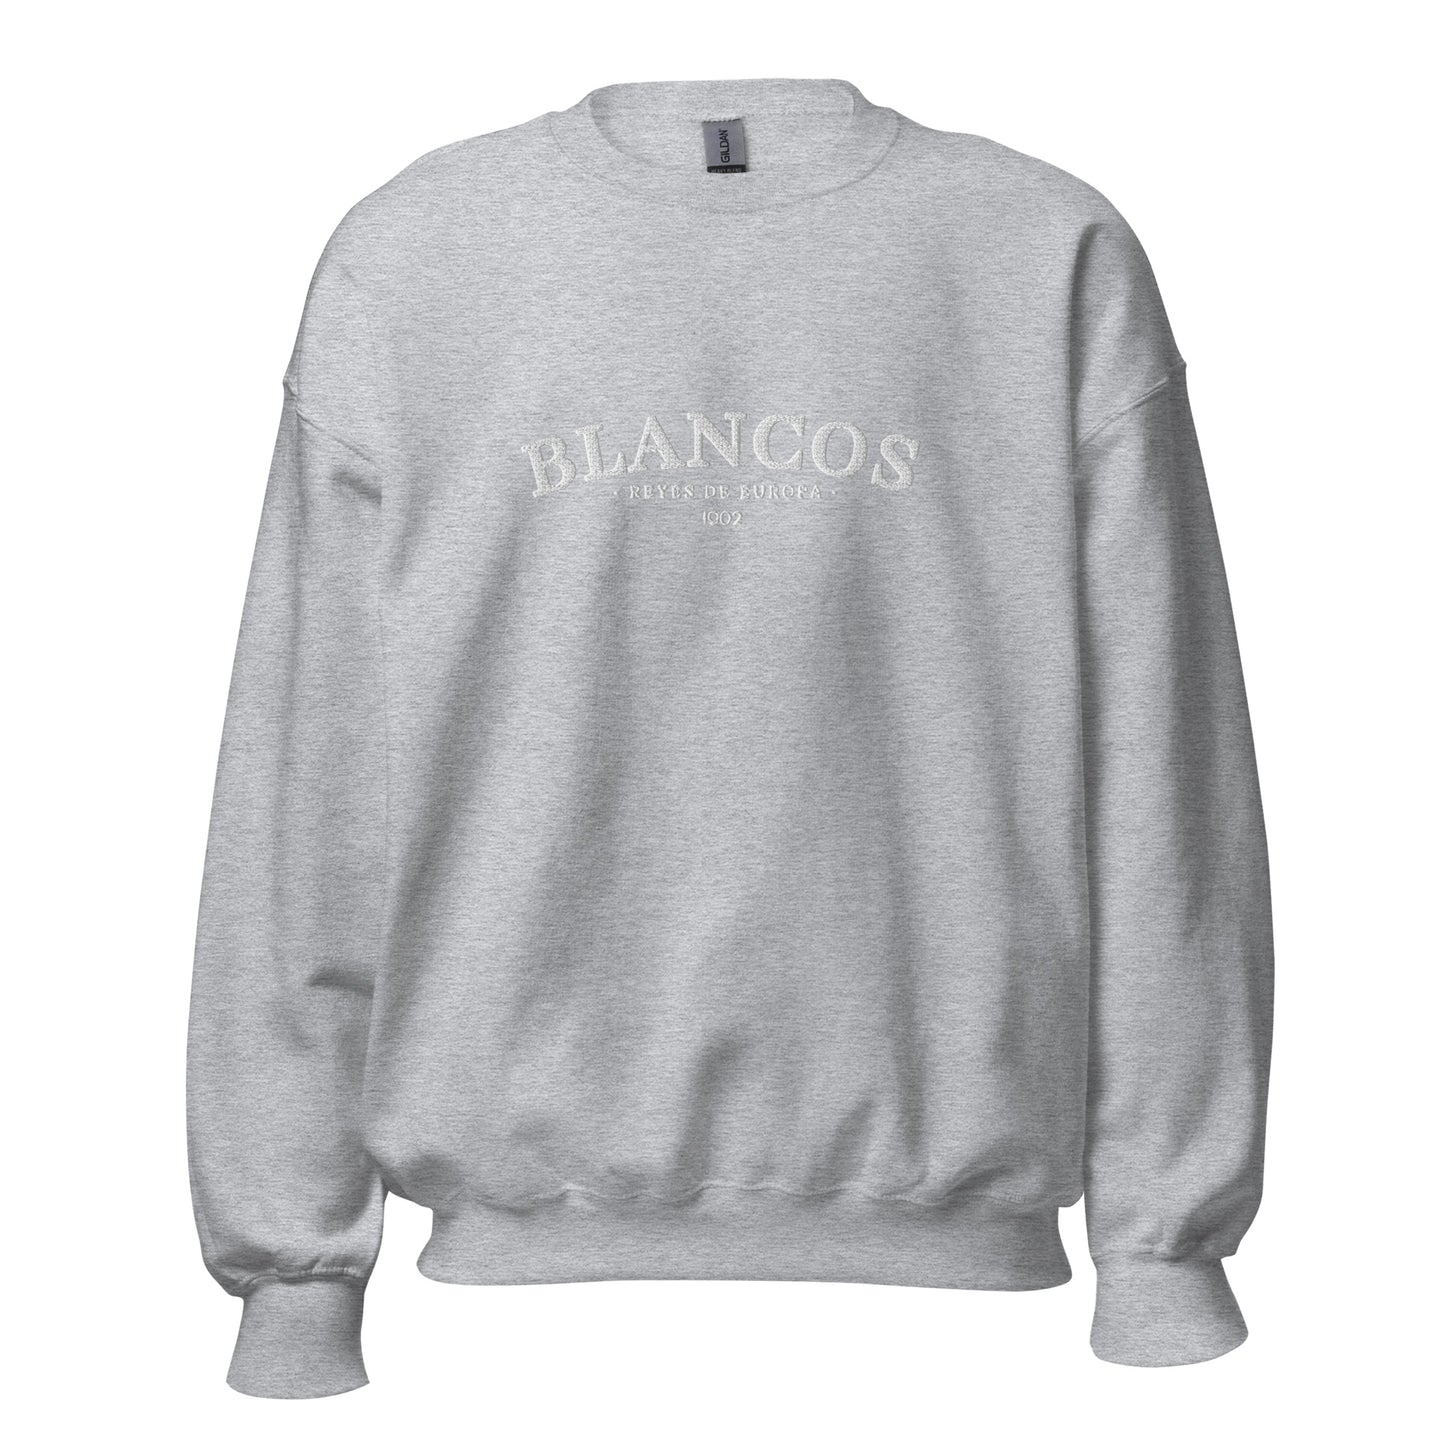 Blancos Retro Sweatshirt